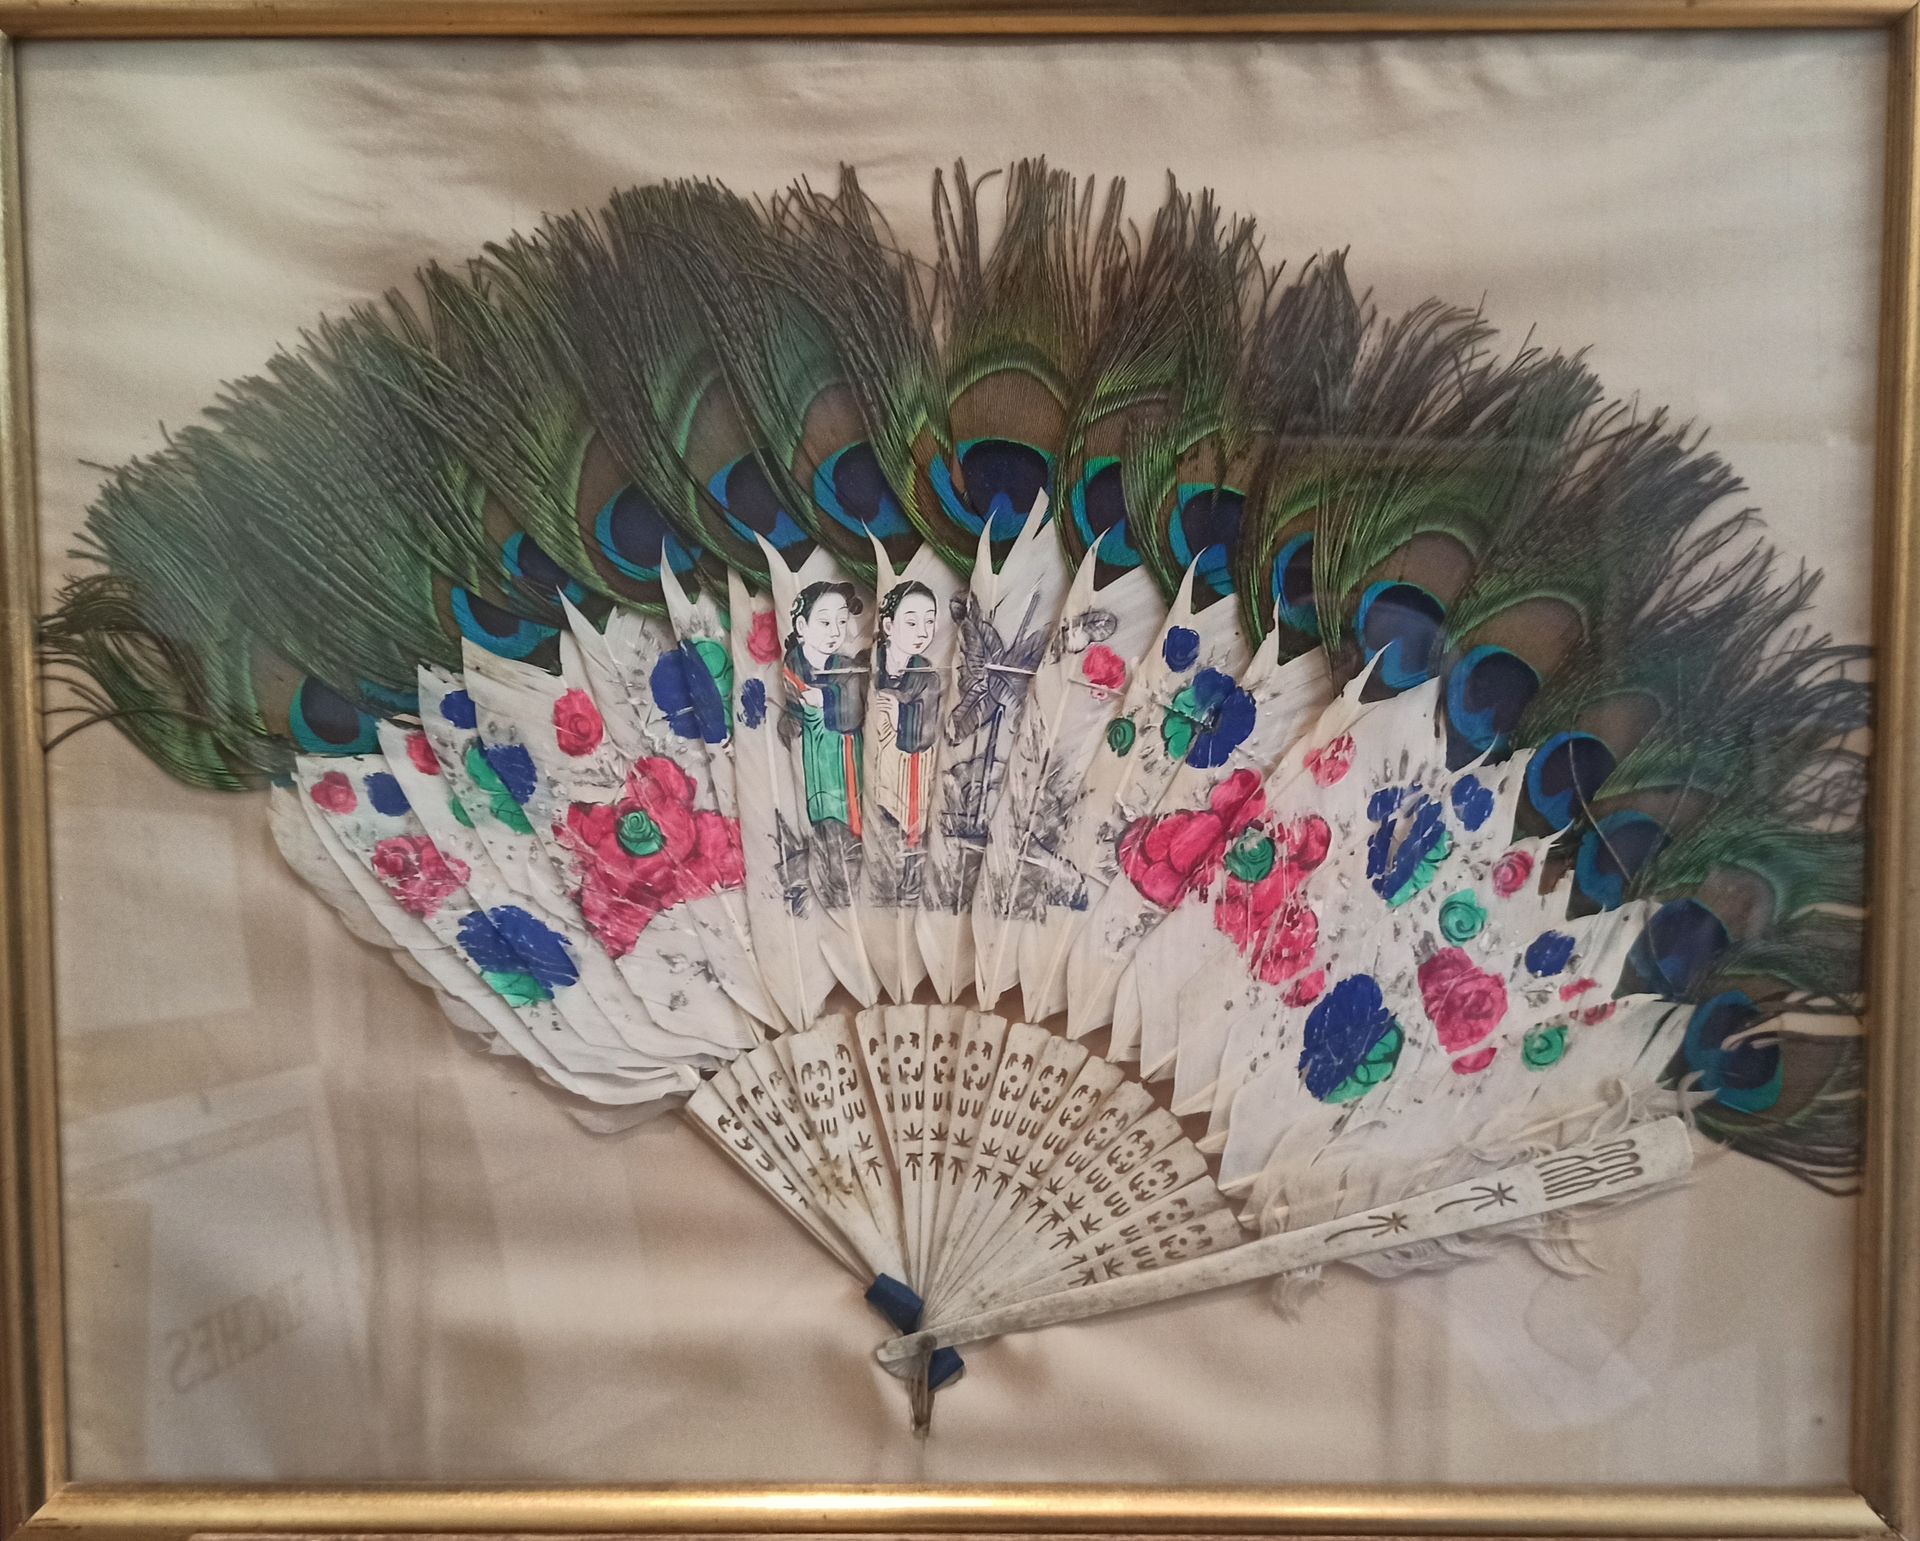 Null 中国，19世纪。

羽毛扇和孔雀羽毛上绘有花朵和女性形象。骨架。

一根树枝受损。

32 x 50 厘米